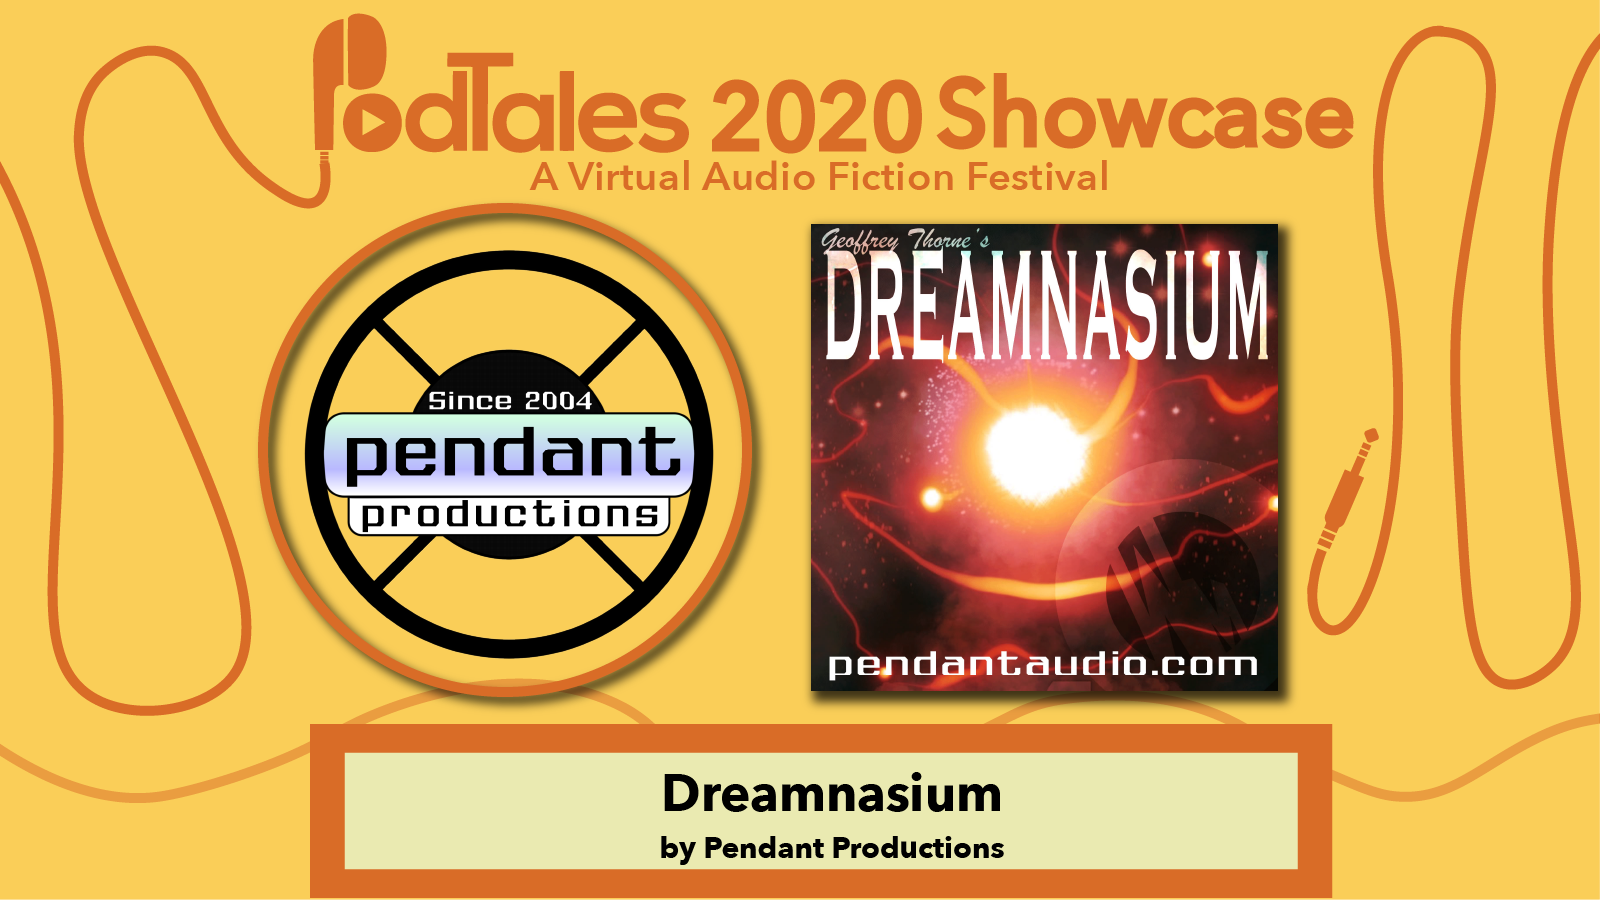 Text reading “PodTales 2020 Showcase: A Virtual Audio Fiction Festival”, Pendant Productions Production Logo, Show Art for Dreamnasium, Text reading “Dreamnasium by Pendant Productions”